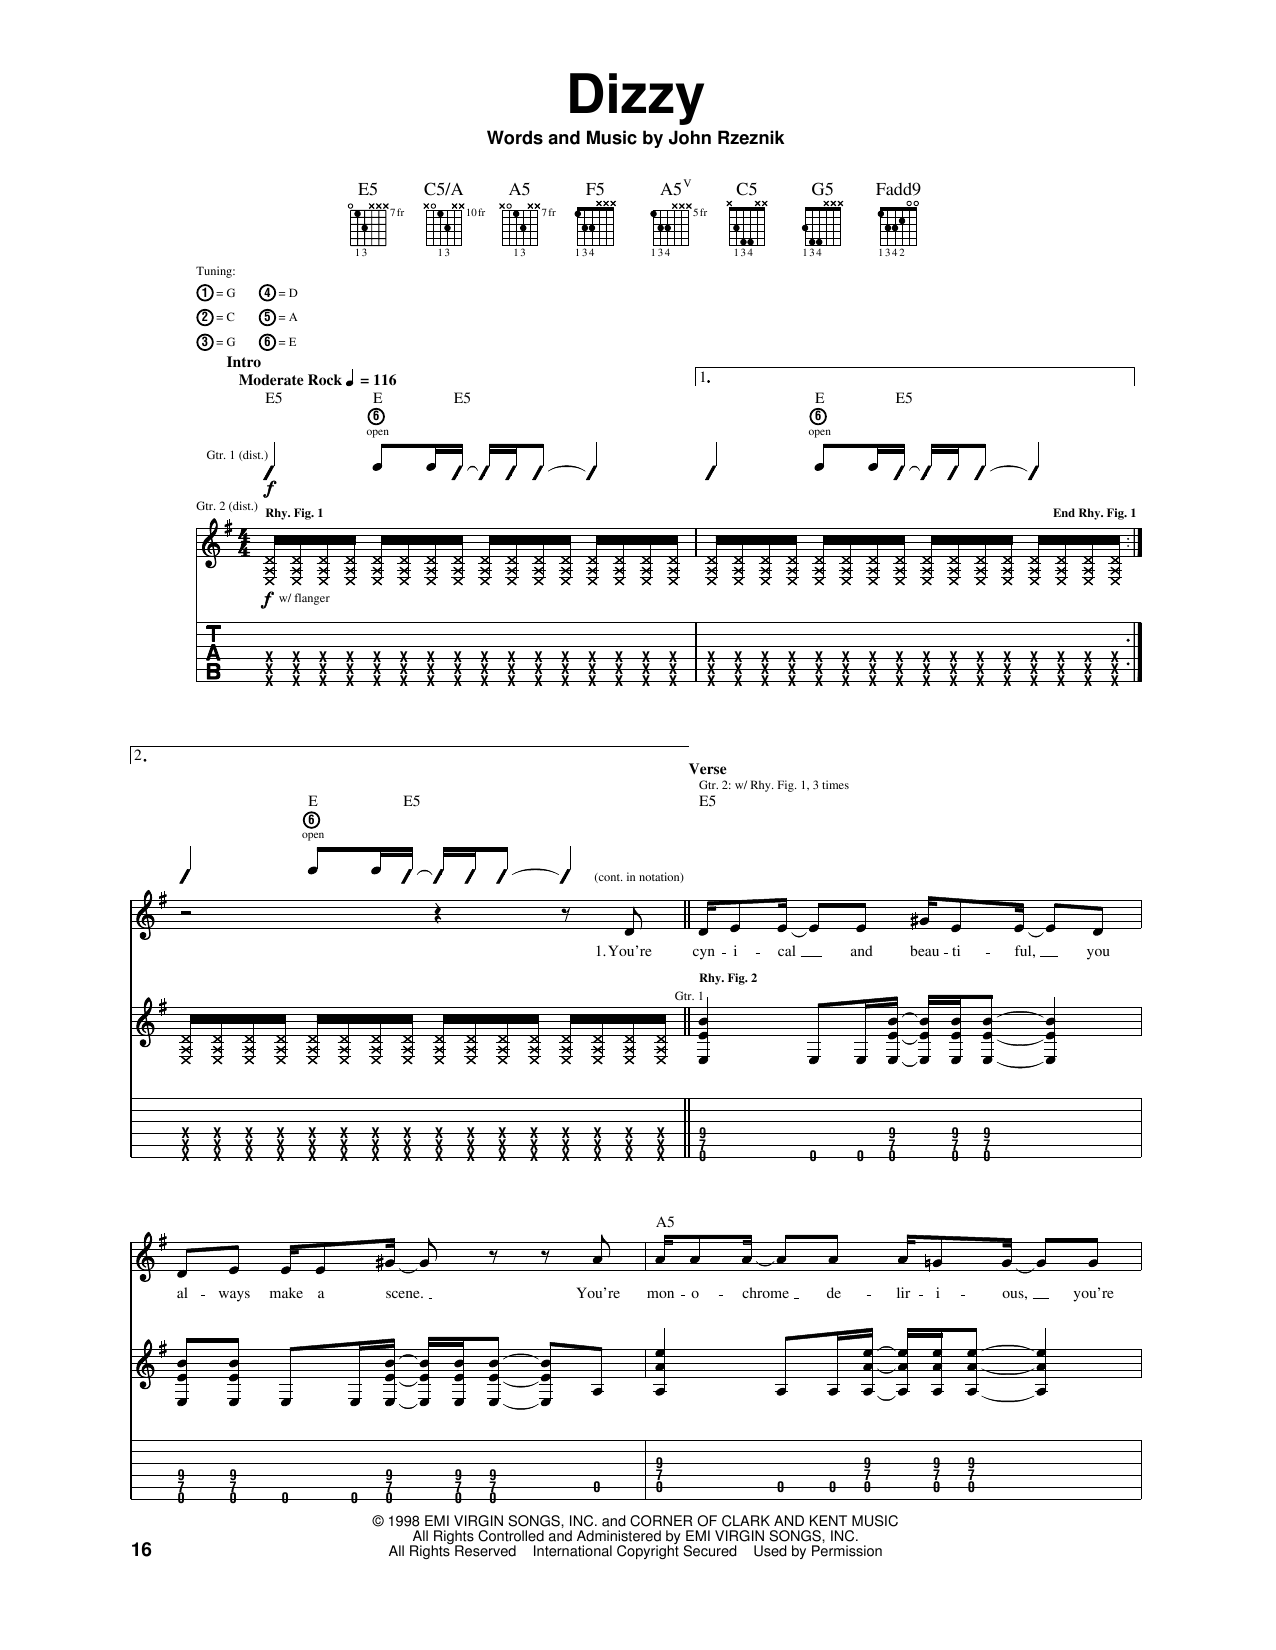 The Goo Goo Dolls Dizzy Sheet Music Notes & Chords for Guitar Tab - Download or Print PDF